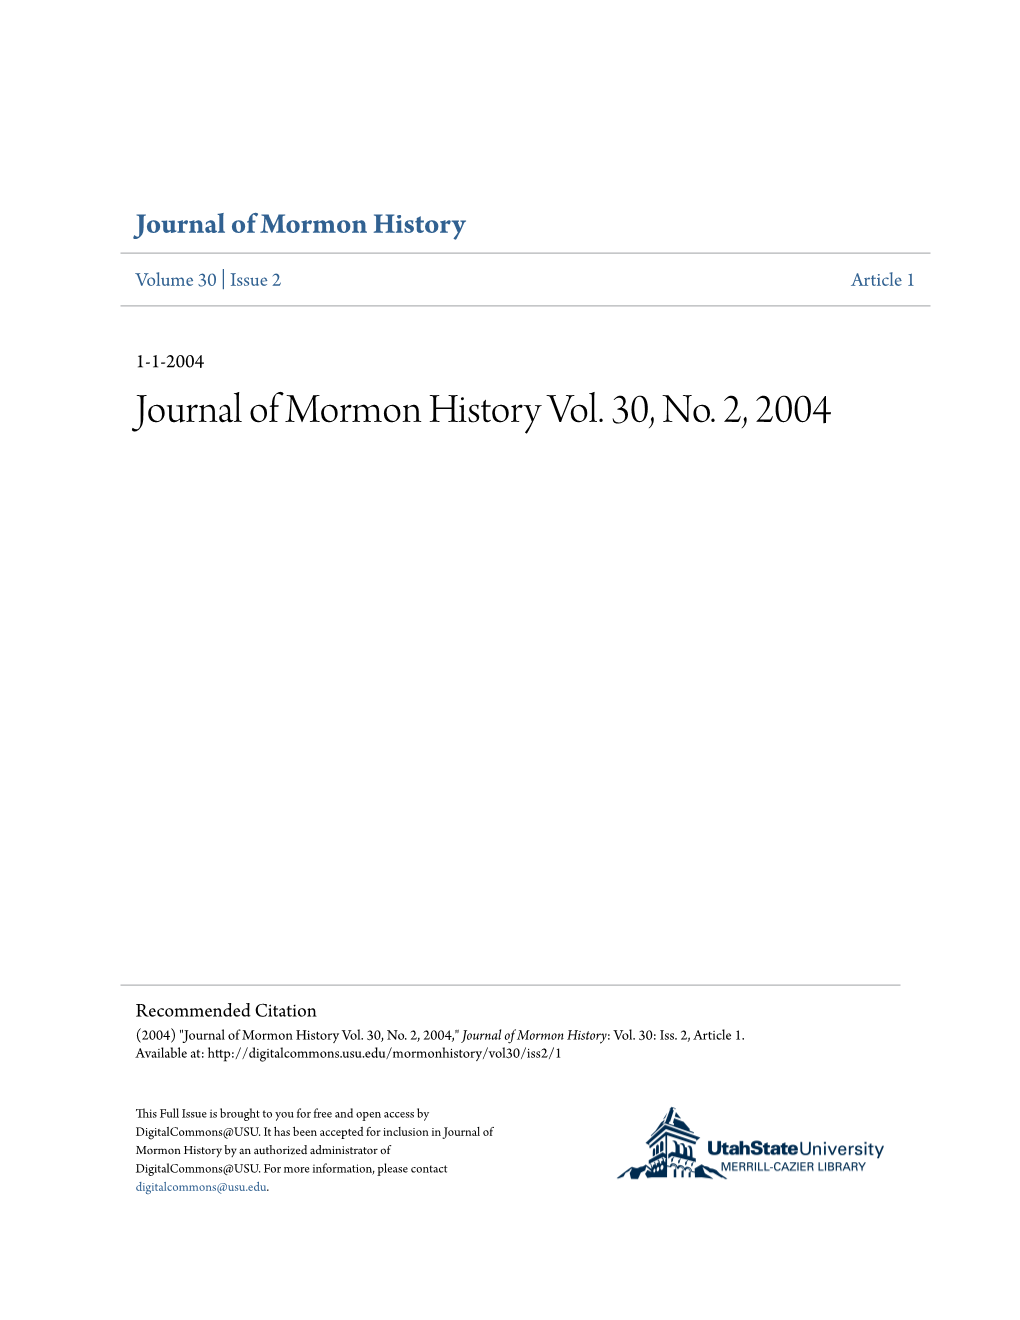 Journal of Mormon History Vol. 30, No. 2, 2004